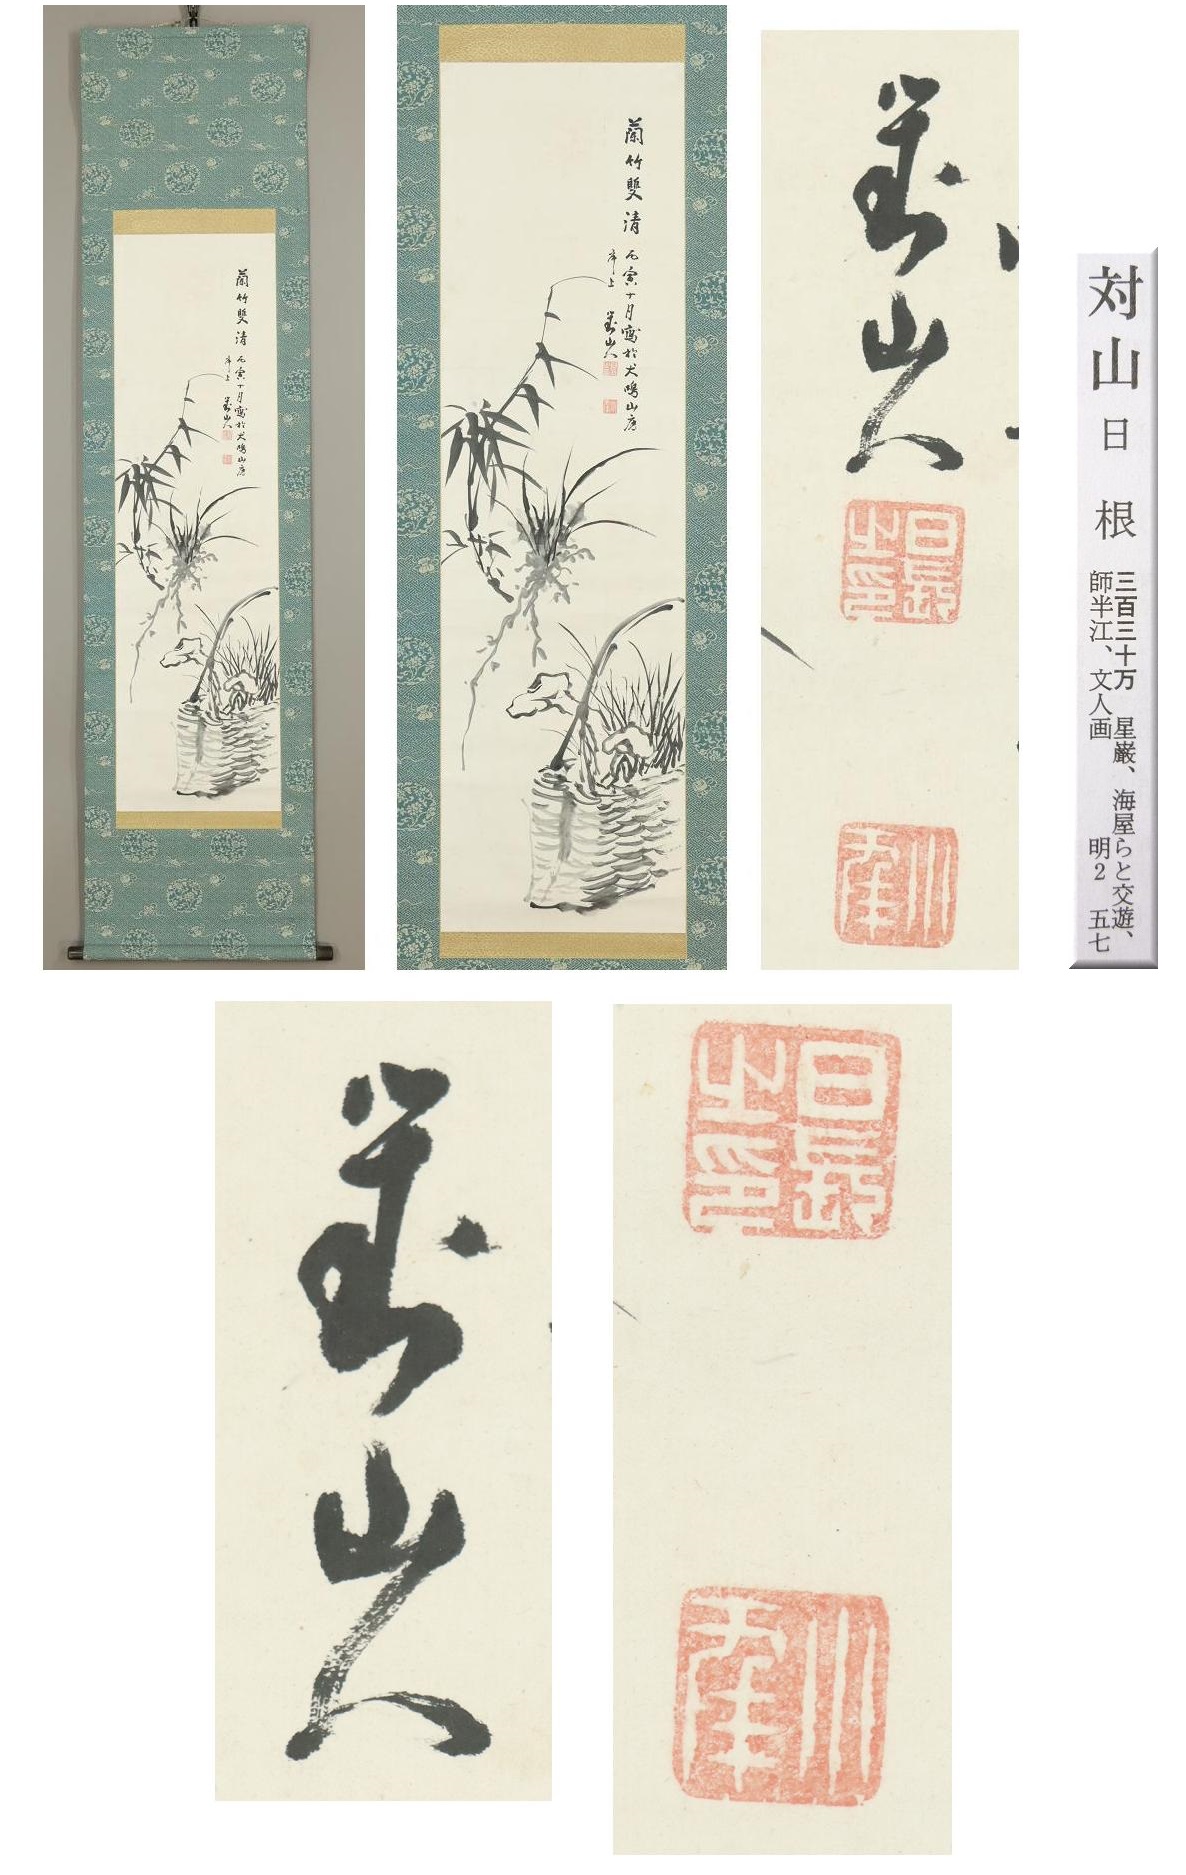 【SALE品質保証】◆日根対山◆蘭竹双清◆日本画◆肉筆◆紙本◆掛軸◆m393 花鳥、鳥獣